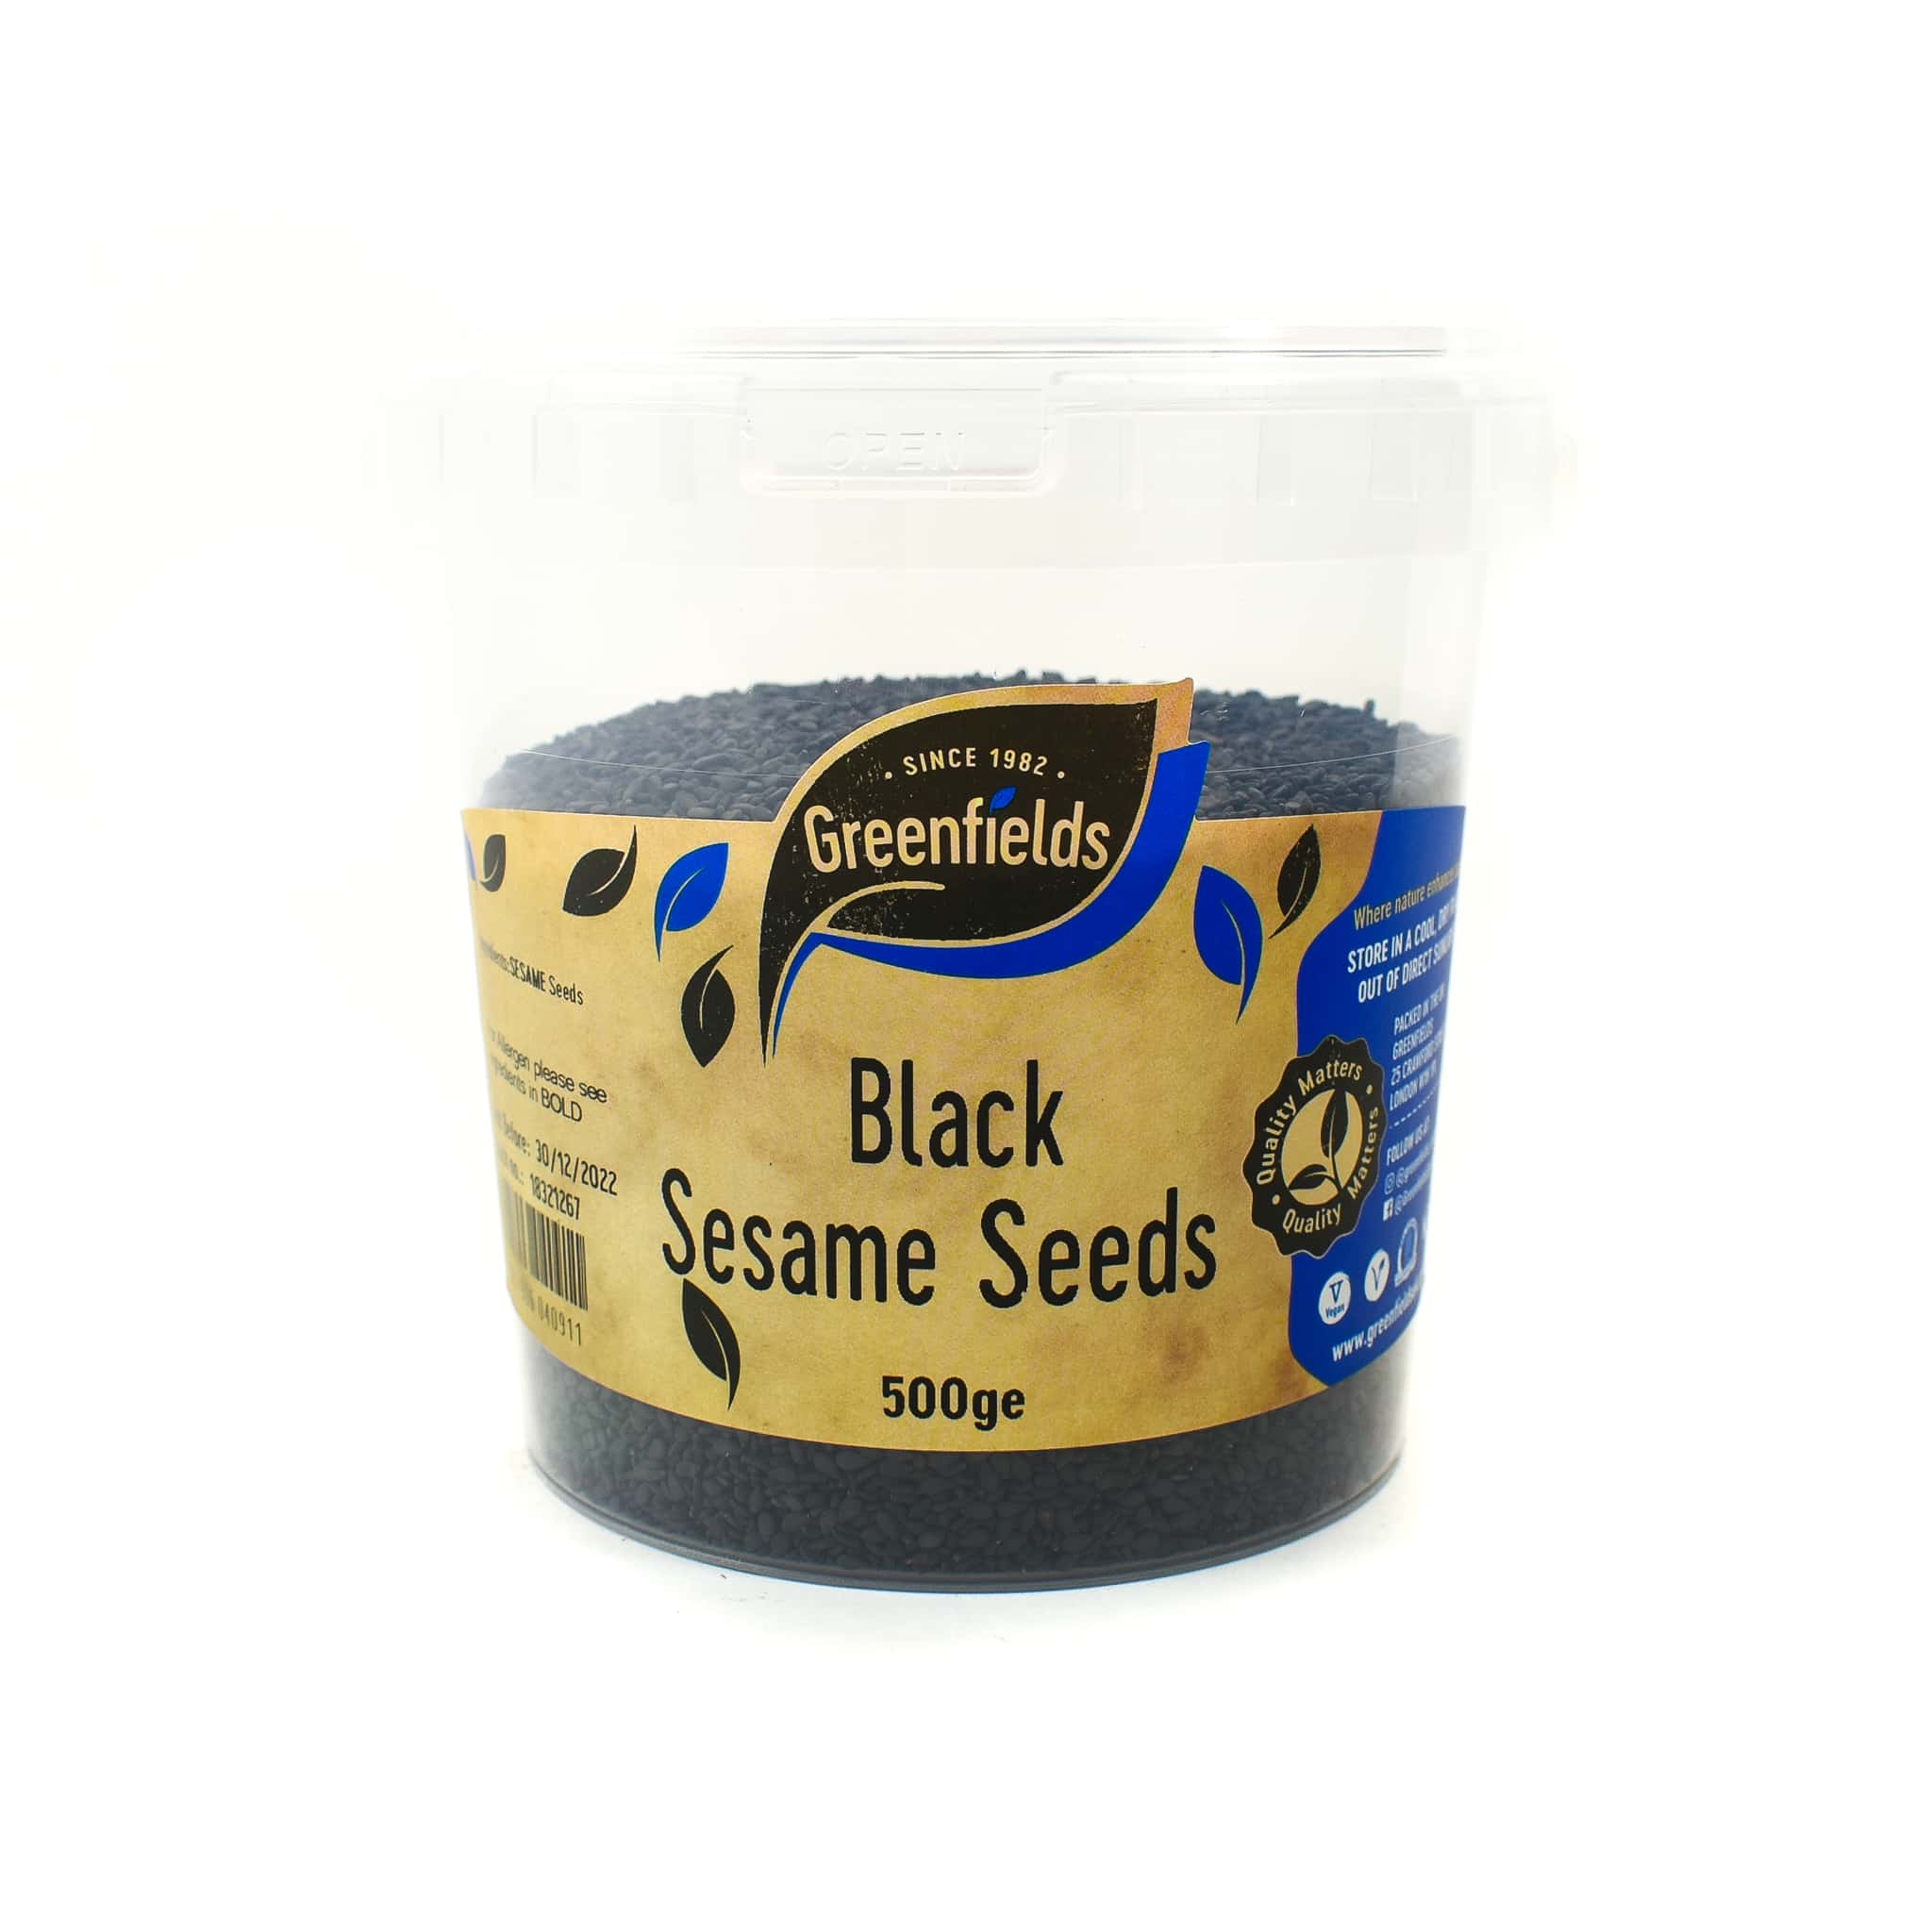 Black Sesame Seeds Catering Size, 500g